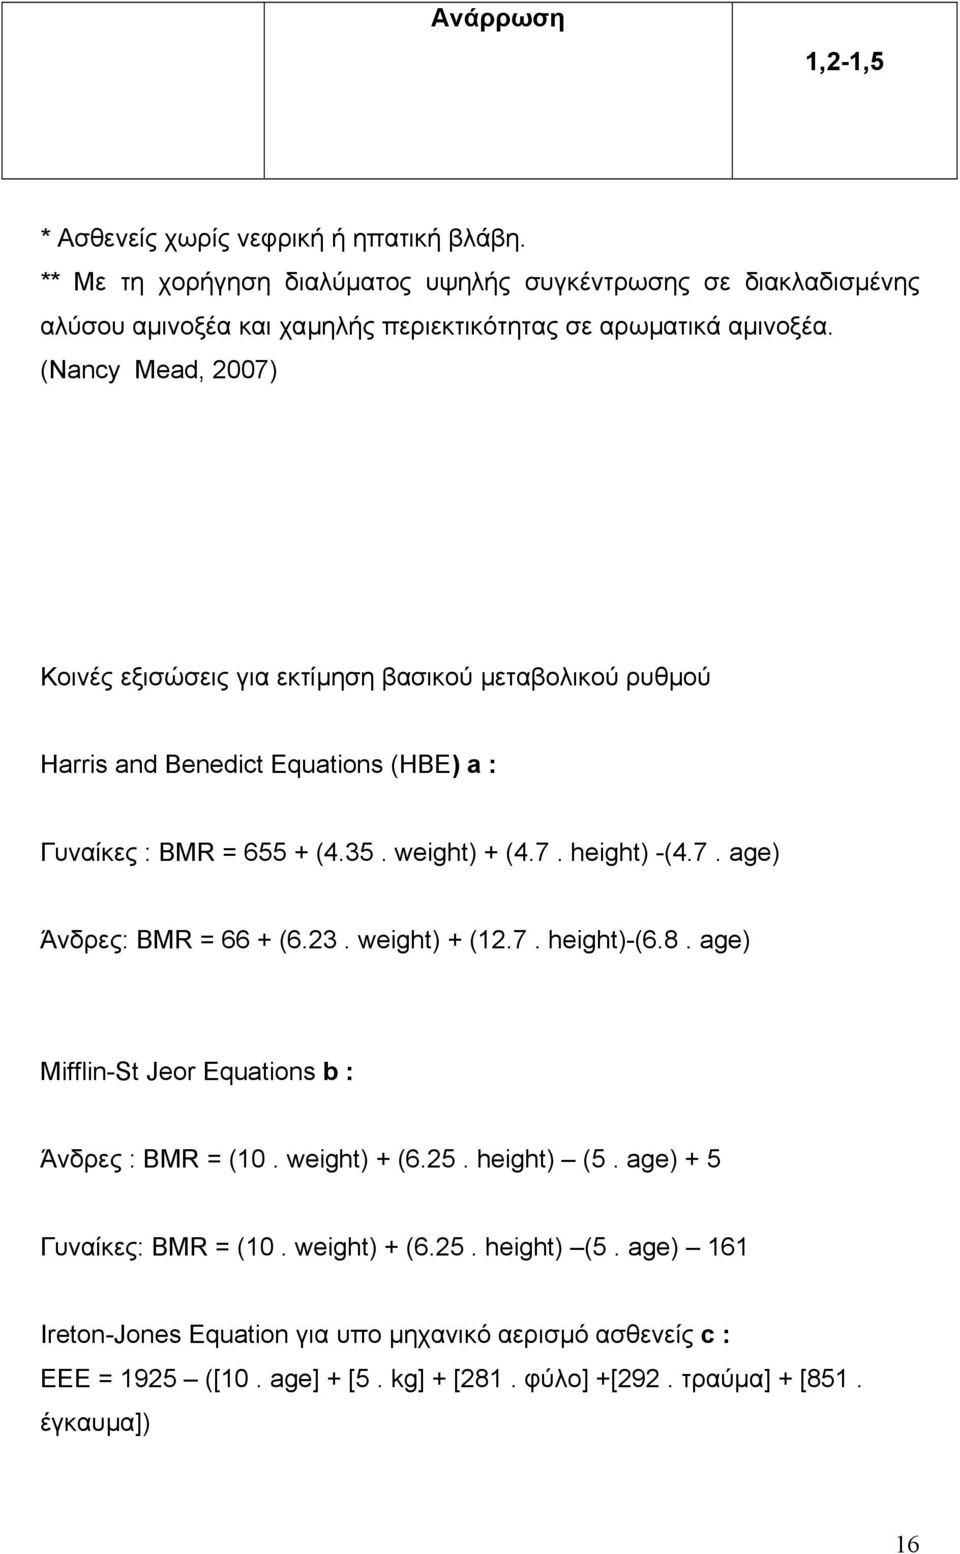 (Nancy Mead, 2007) Κοινές εξισώσεις για εκτίµηση βασικού µεταβολικού ρυθµού Harris and Benedict Equations (HBE) a : Γυναίκες : BMR = 655 + (4.35. weight) + (4.7. height) -(4.7. age) Άνδρες: BMR = 66 + (6.